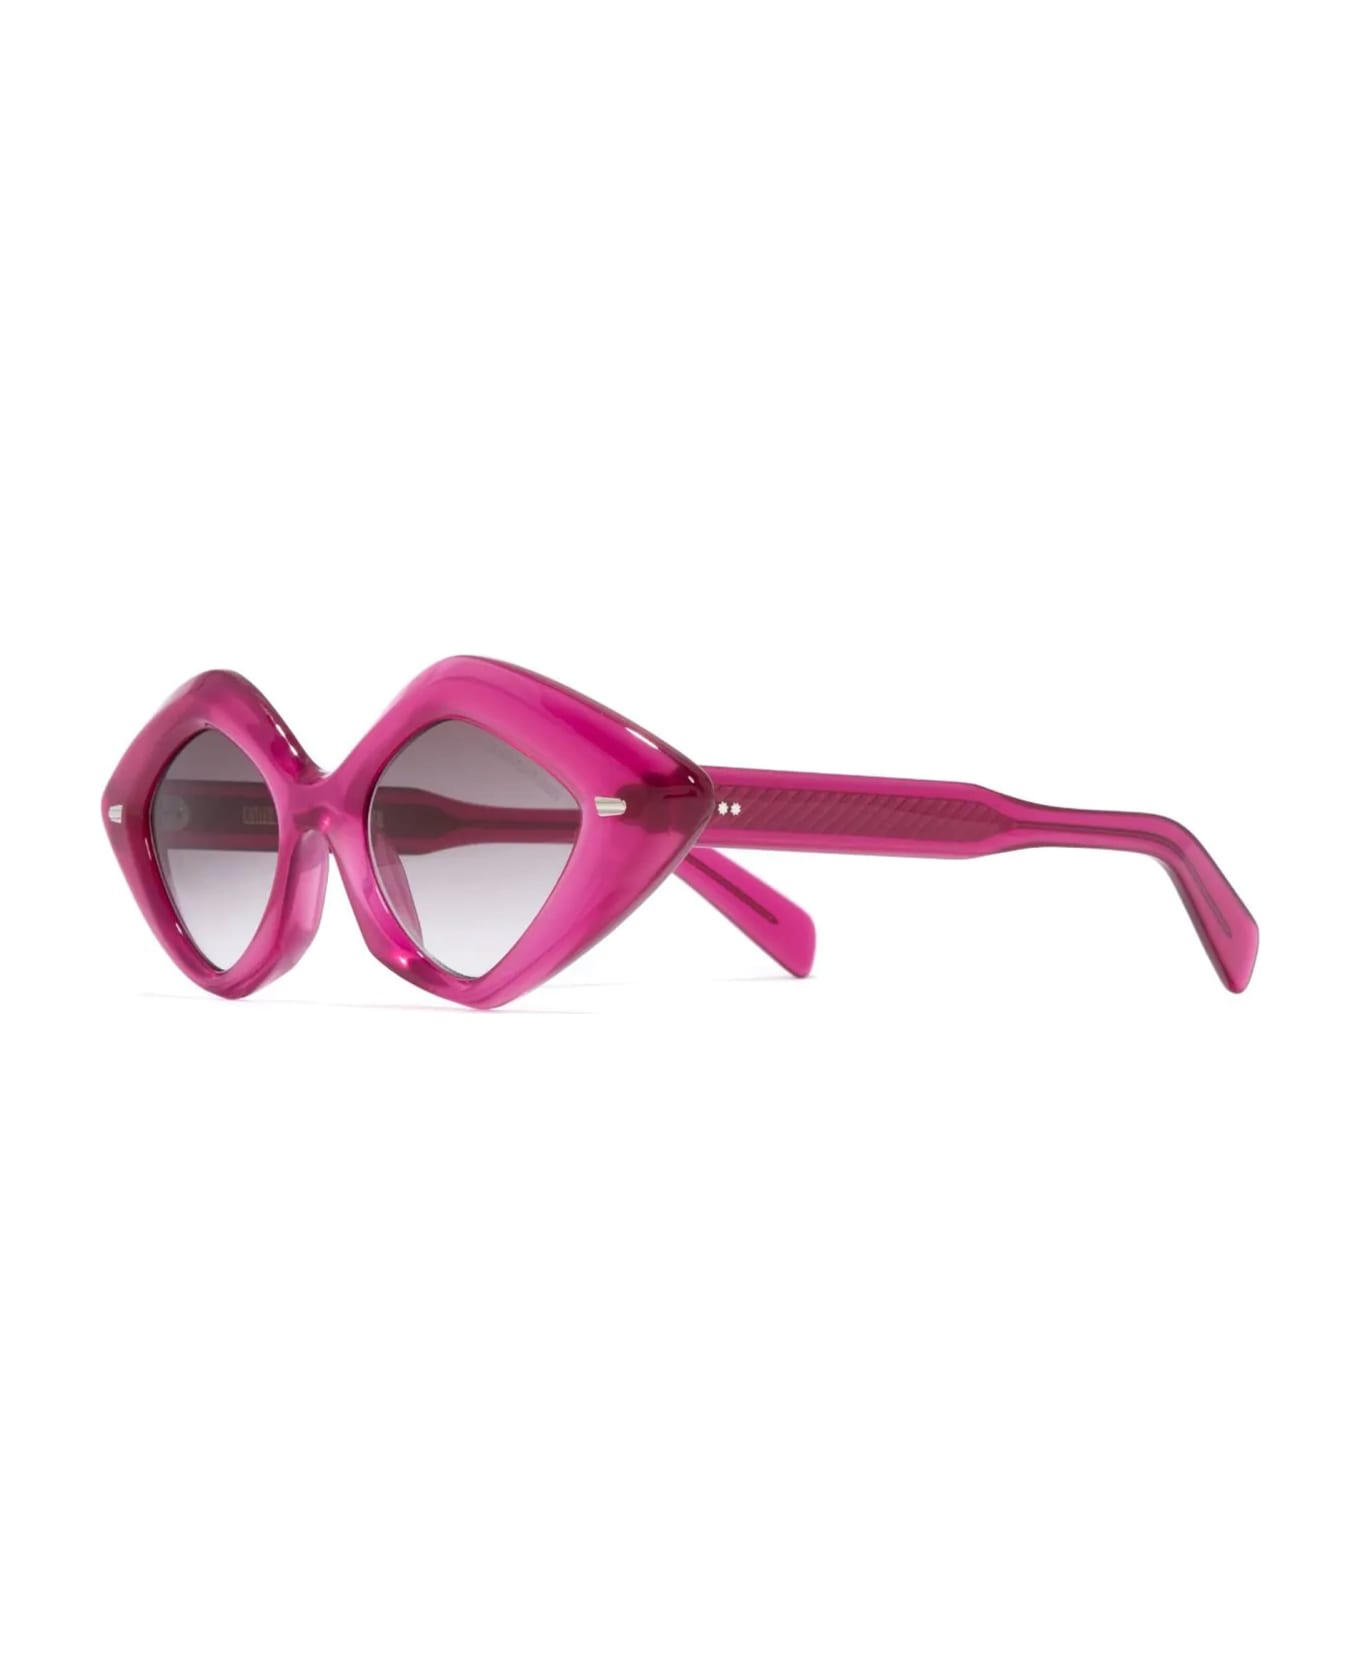 Cutler and Gross 9126 / Fuchsia Sunglasses - fuchsia